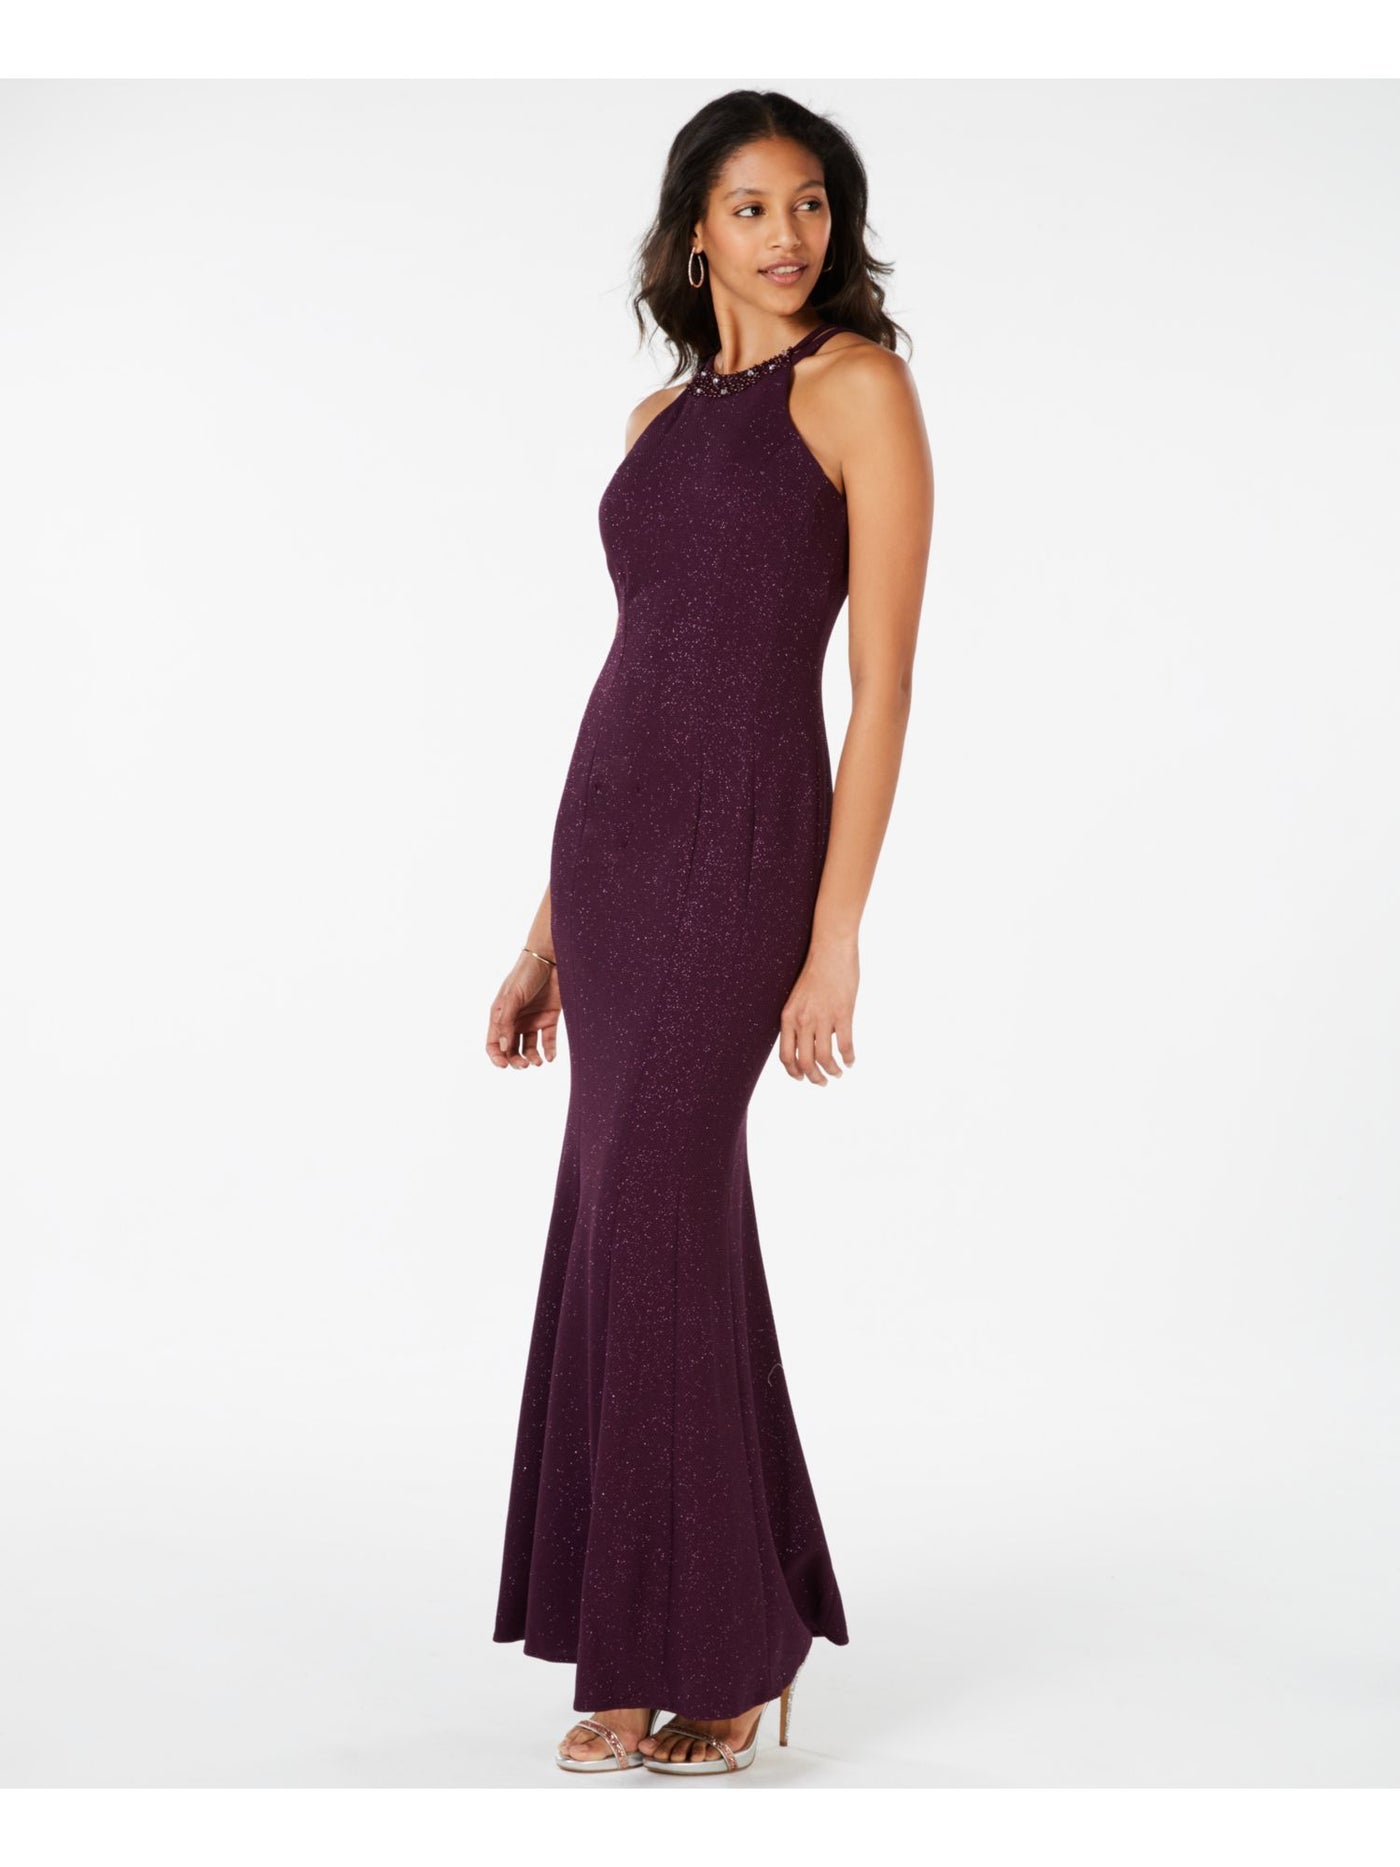 NIGHTWAY Womens Purple Glitter Beaded Sleeveless Halter Full-Length Formal Mermaid Dress 4